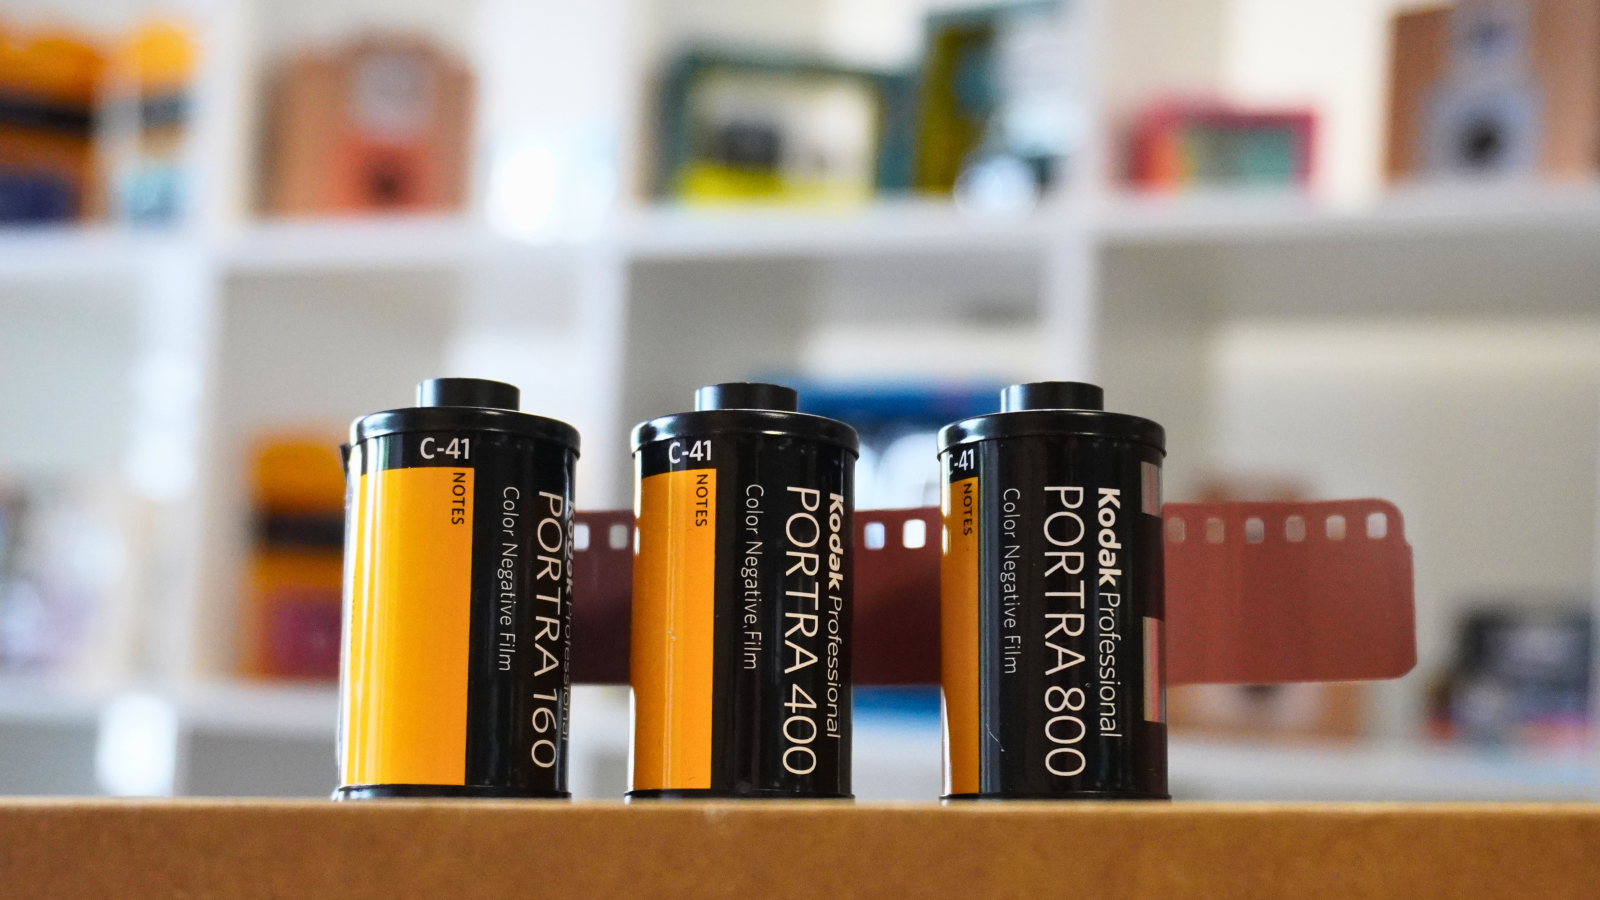 Portra 400 Film Reviews & Photos - The Darkroom Photo Lab